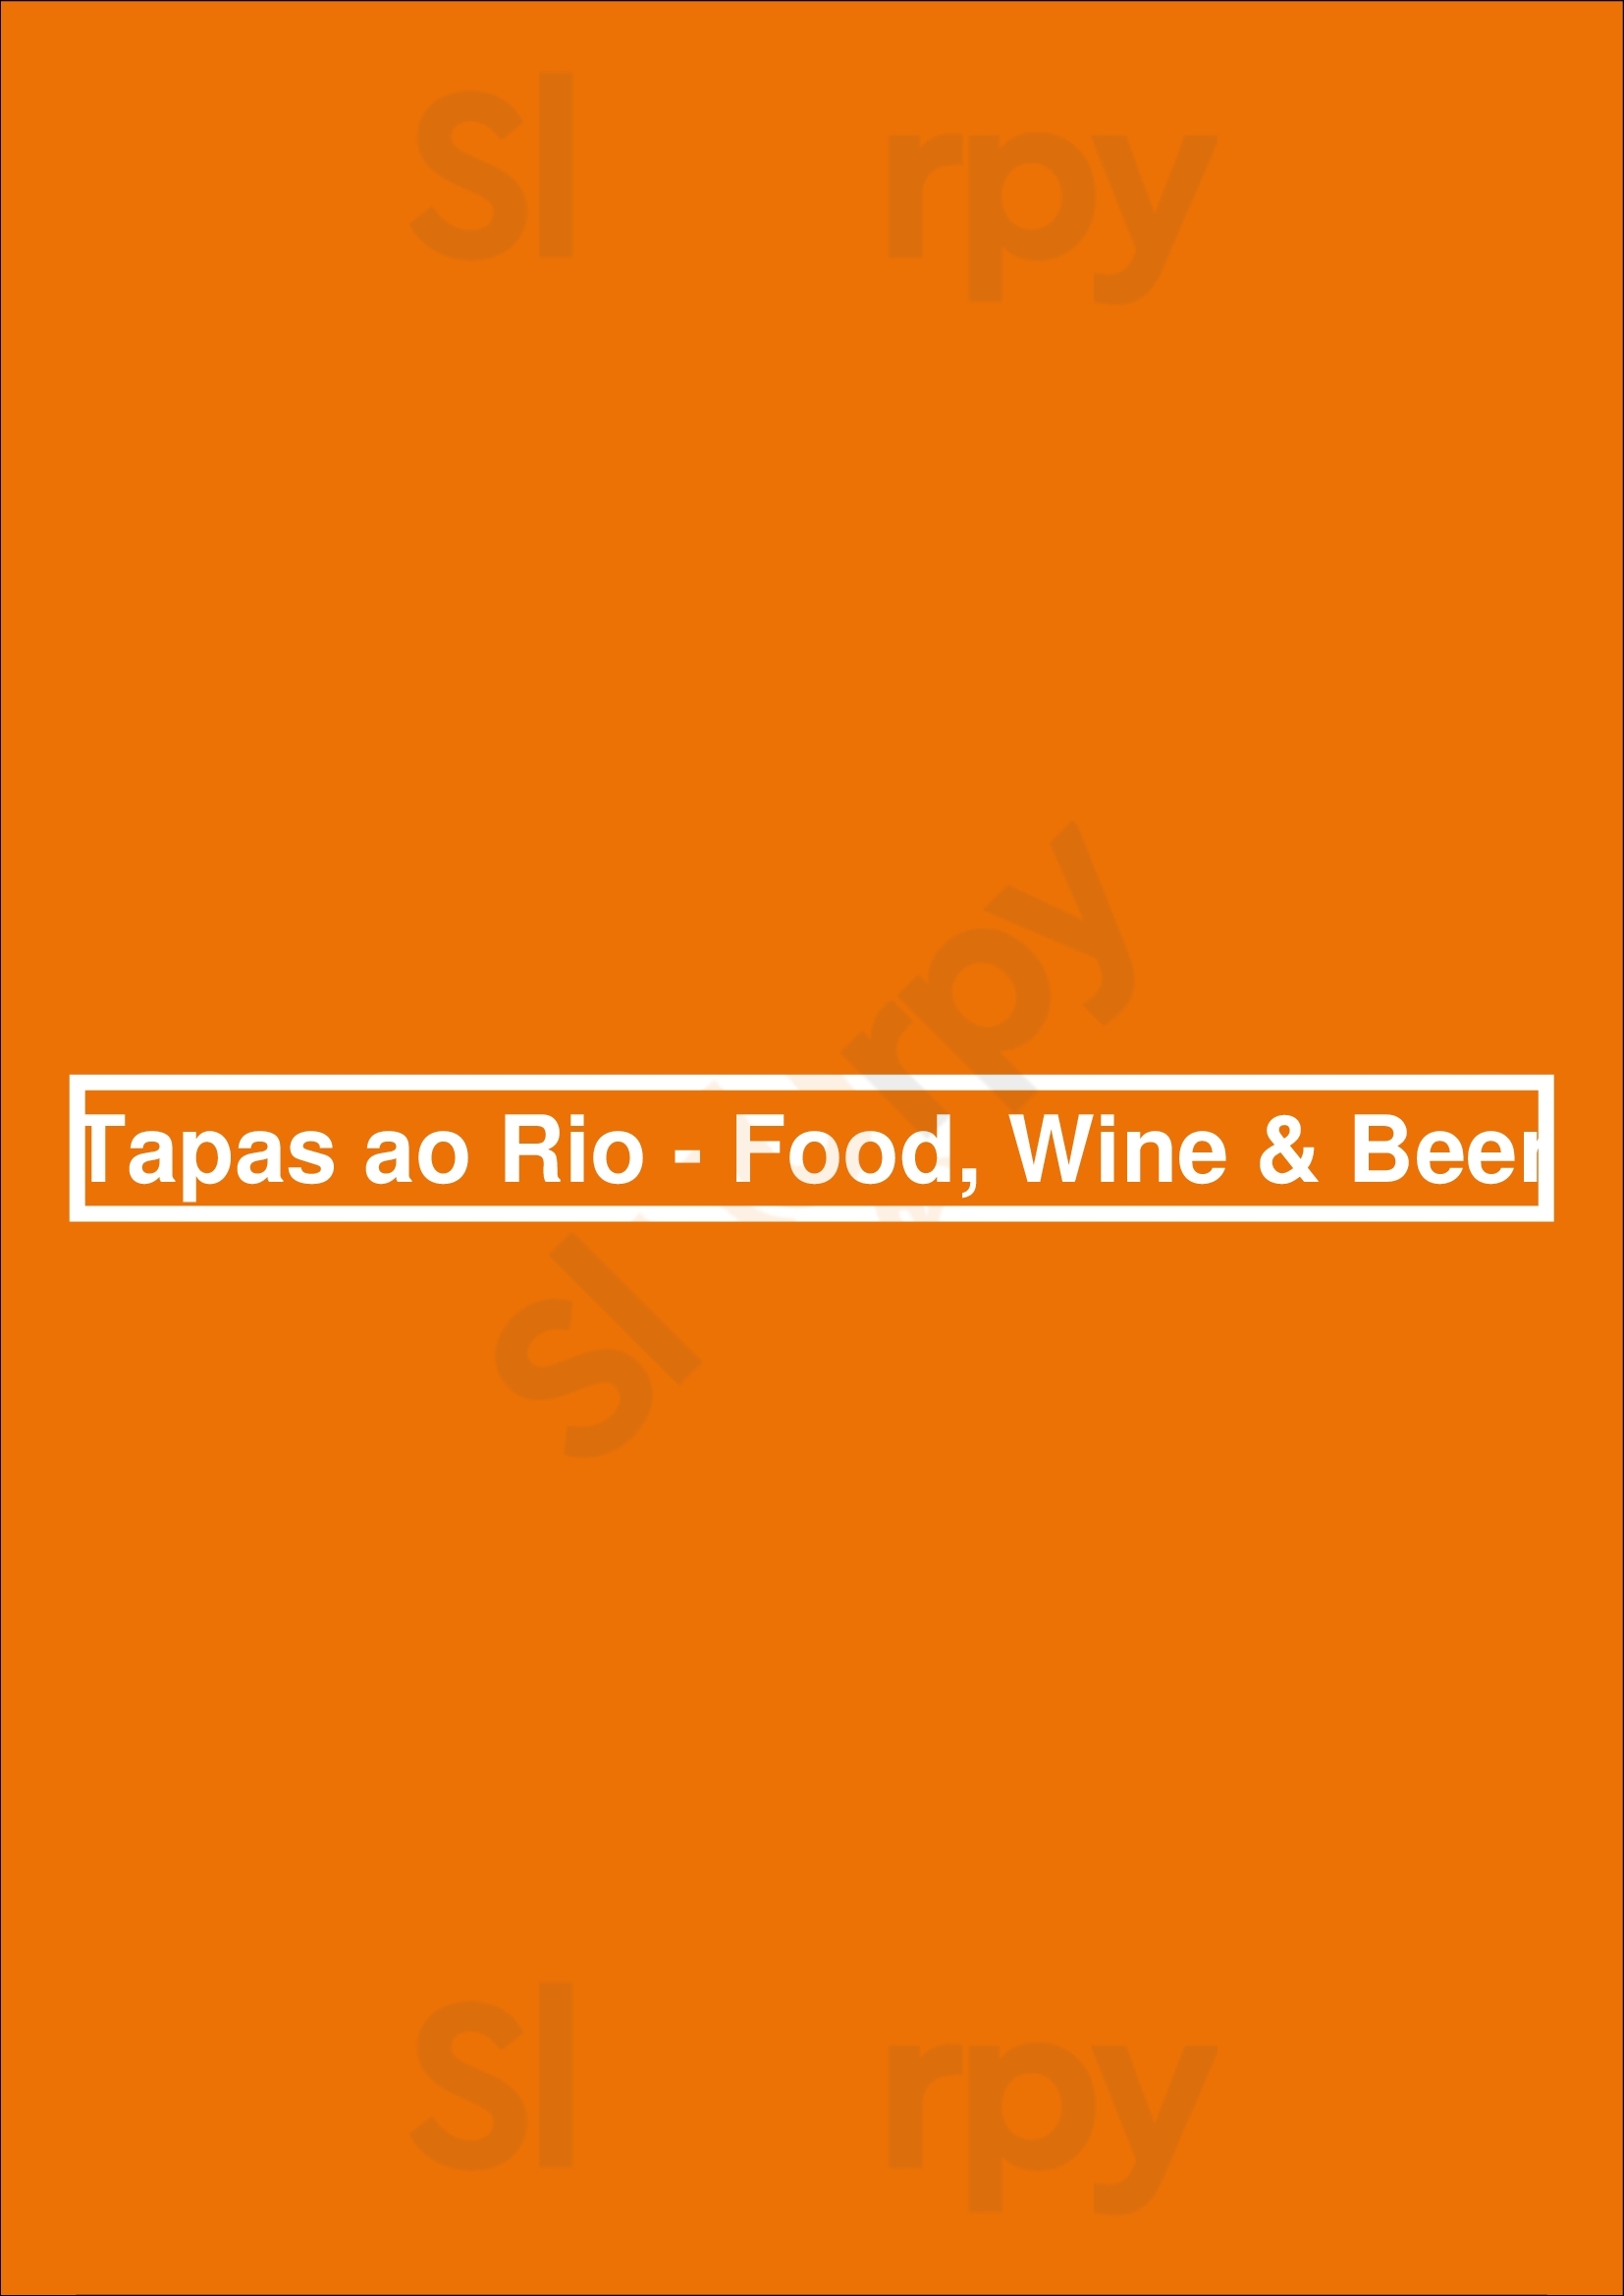 Tapas Ao Rio - Food, Wine & Beer Seixal Menu - 1